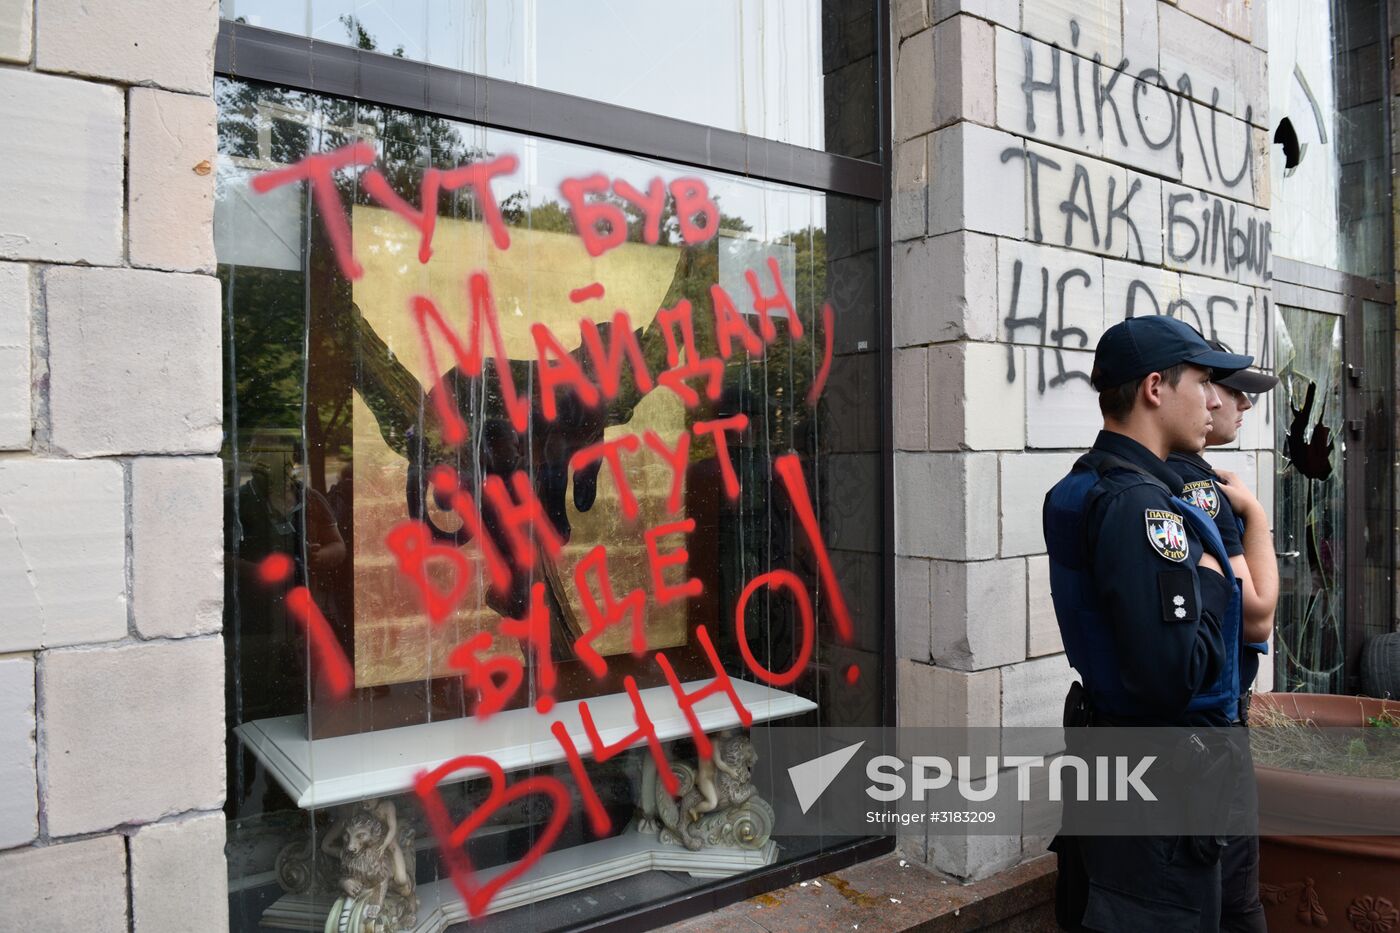 Kiev store wrecked over erased Maidan graffiti